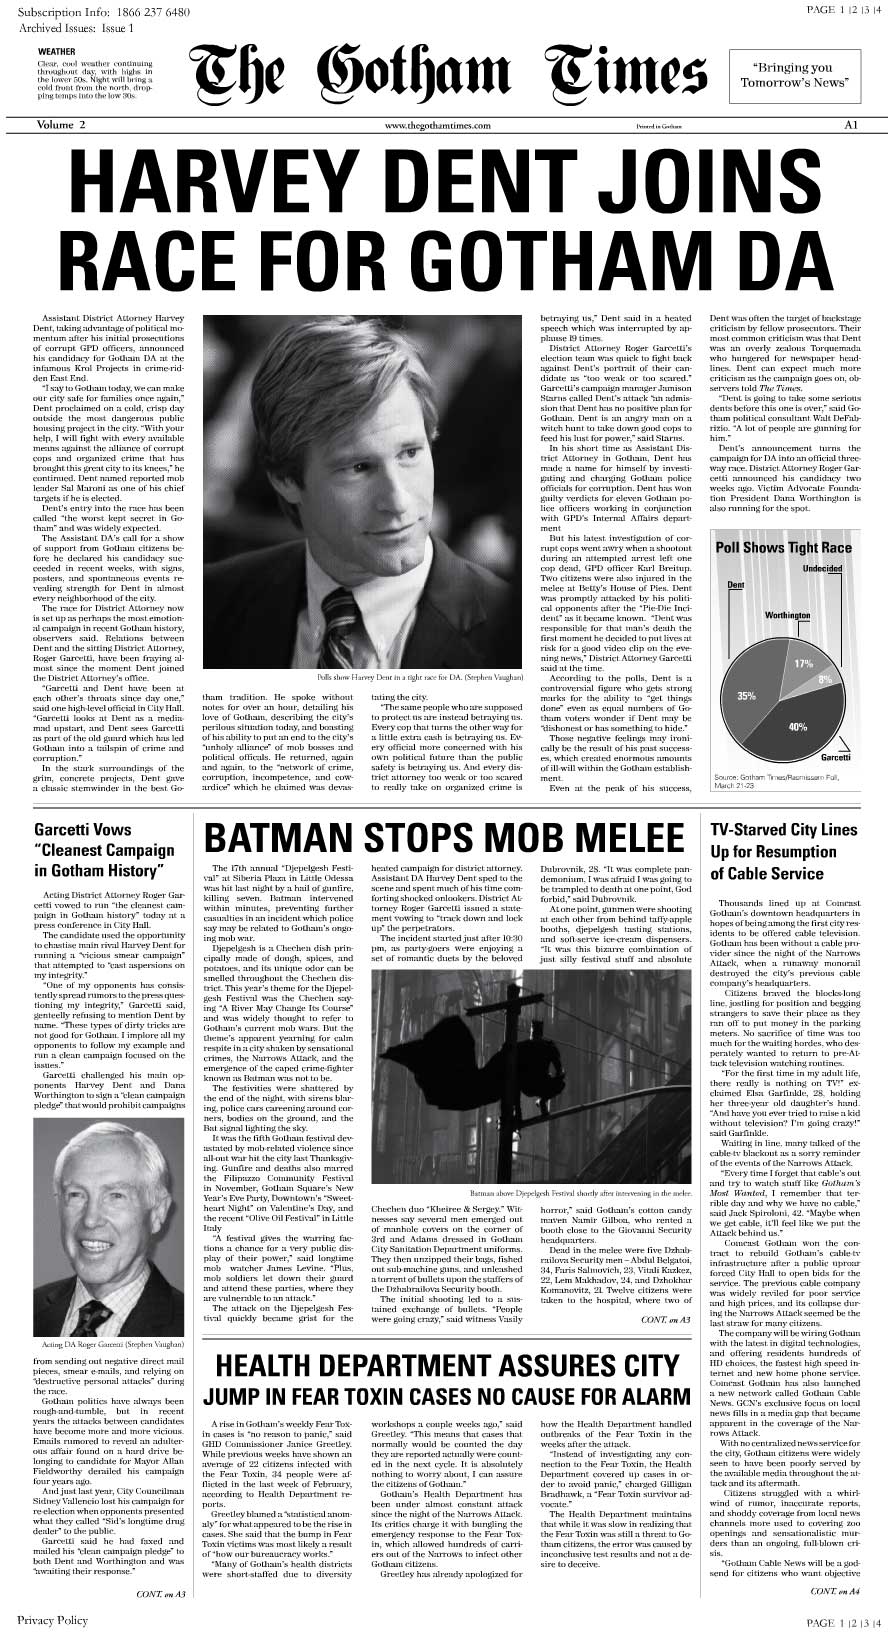 The Gotham Times